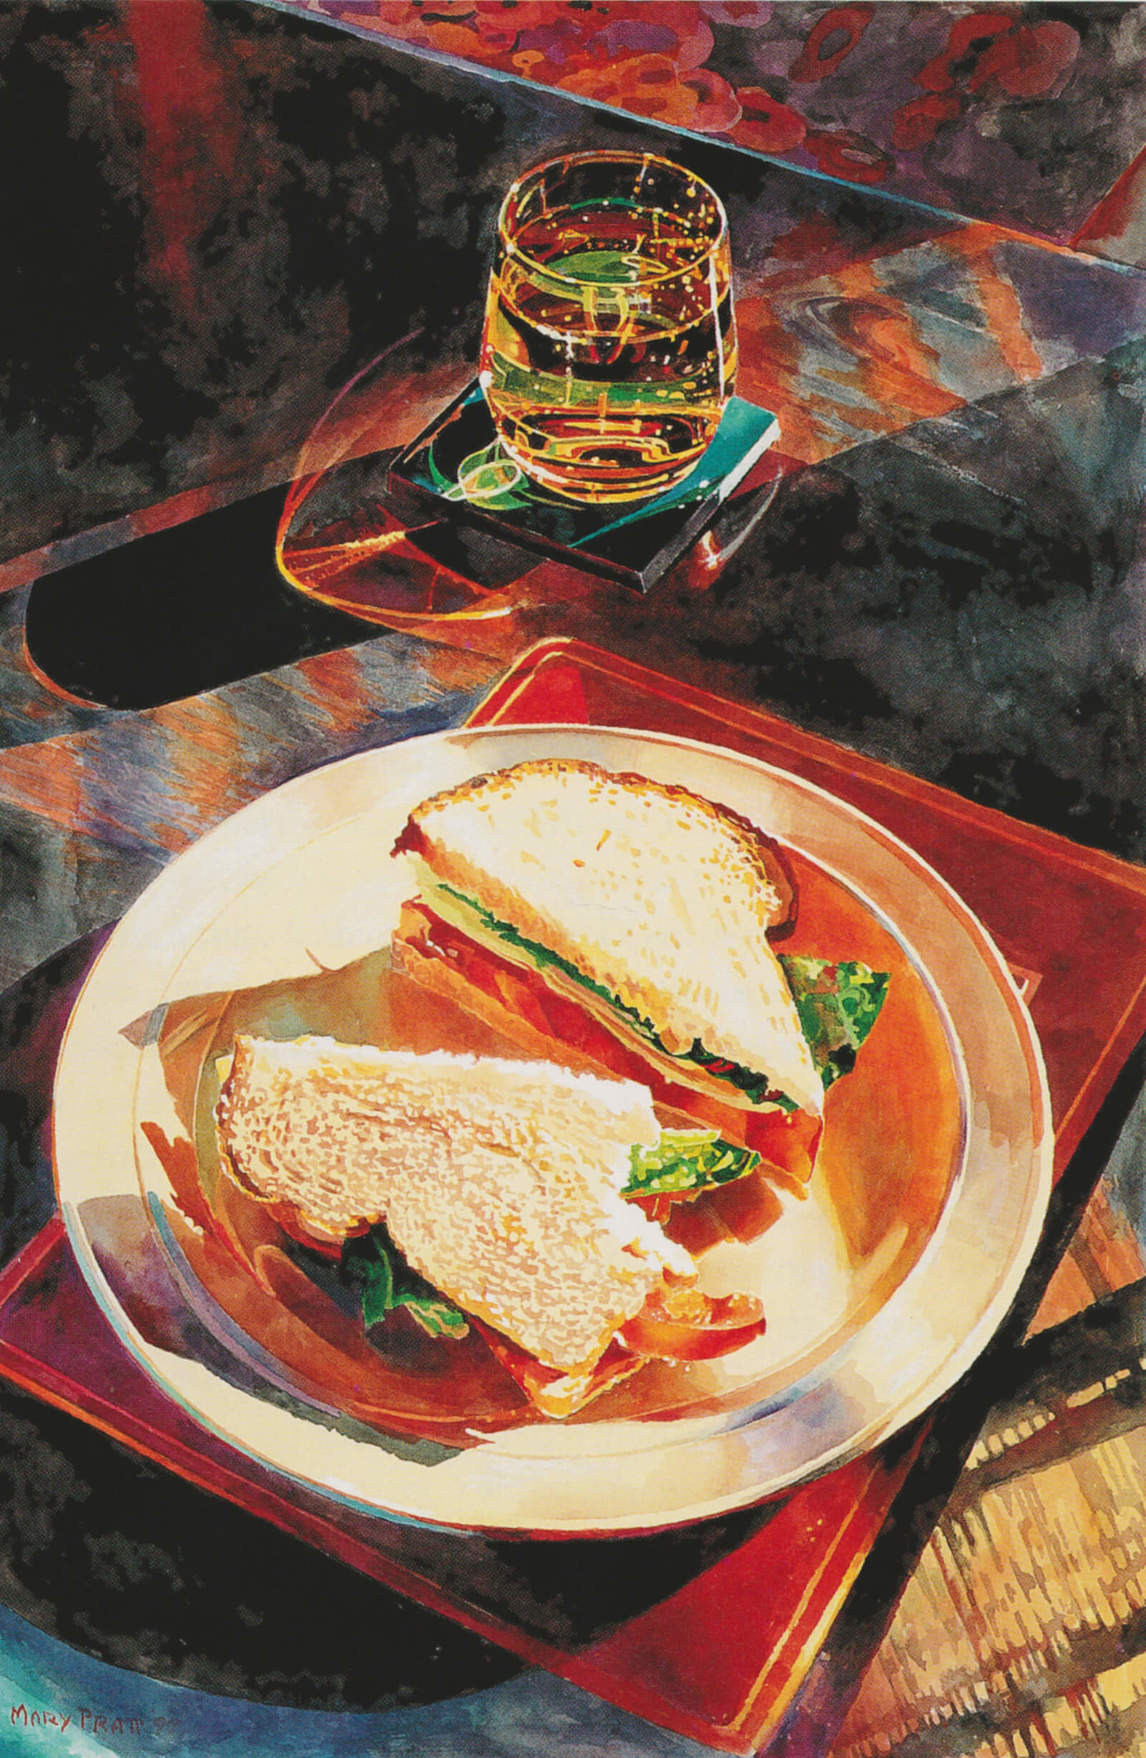 Mary Pratt, Ginger Ale and Tomato Sandwich No. 1, 1999